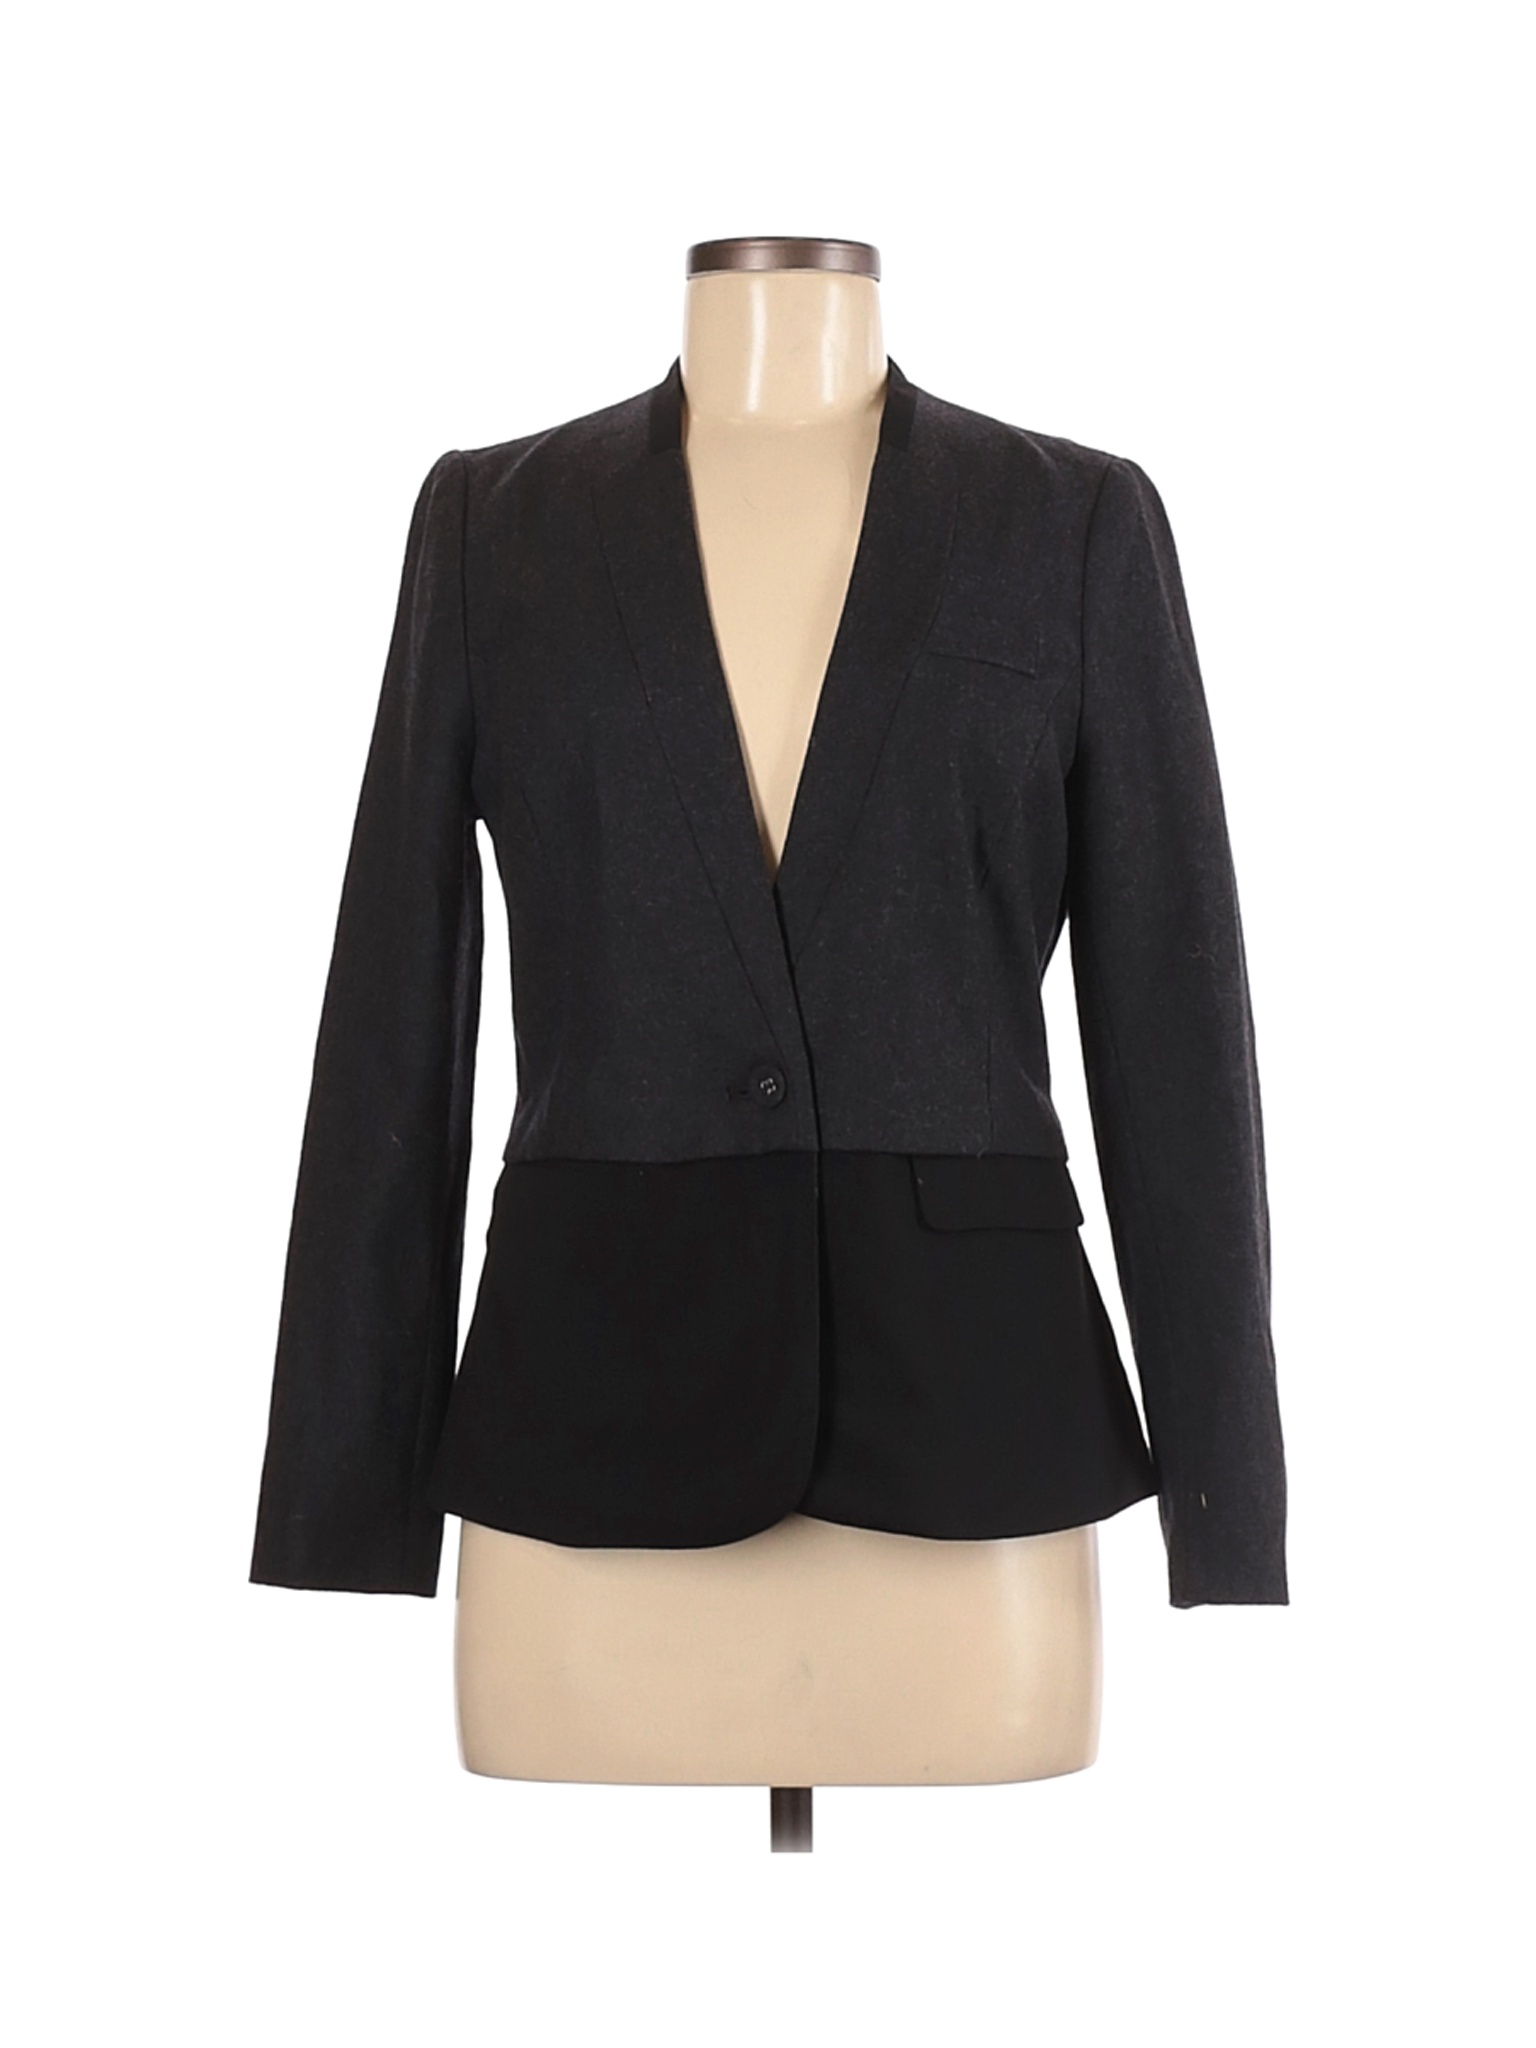 Simply Vera Vera Wang Women Black Wool Blazer M Petites | eBay